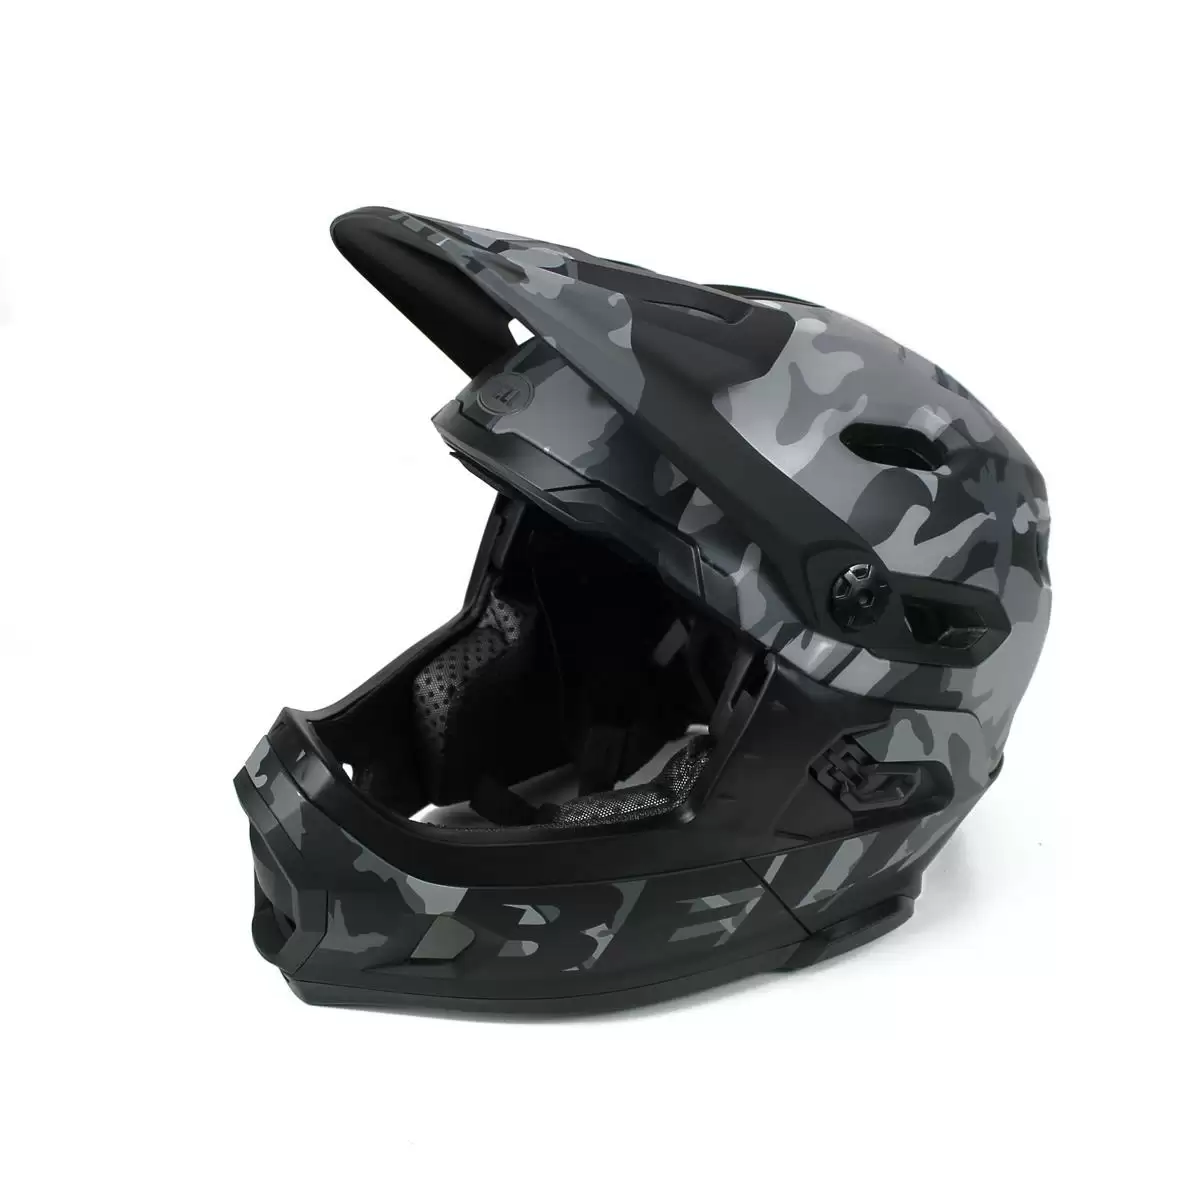 Helmet Super DH MIPS Black Camo Size L (59-62cm) #1